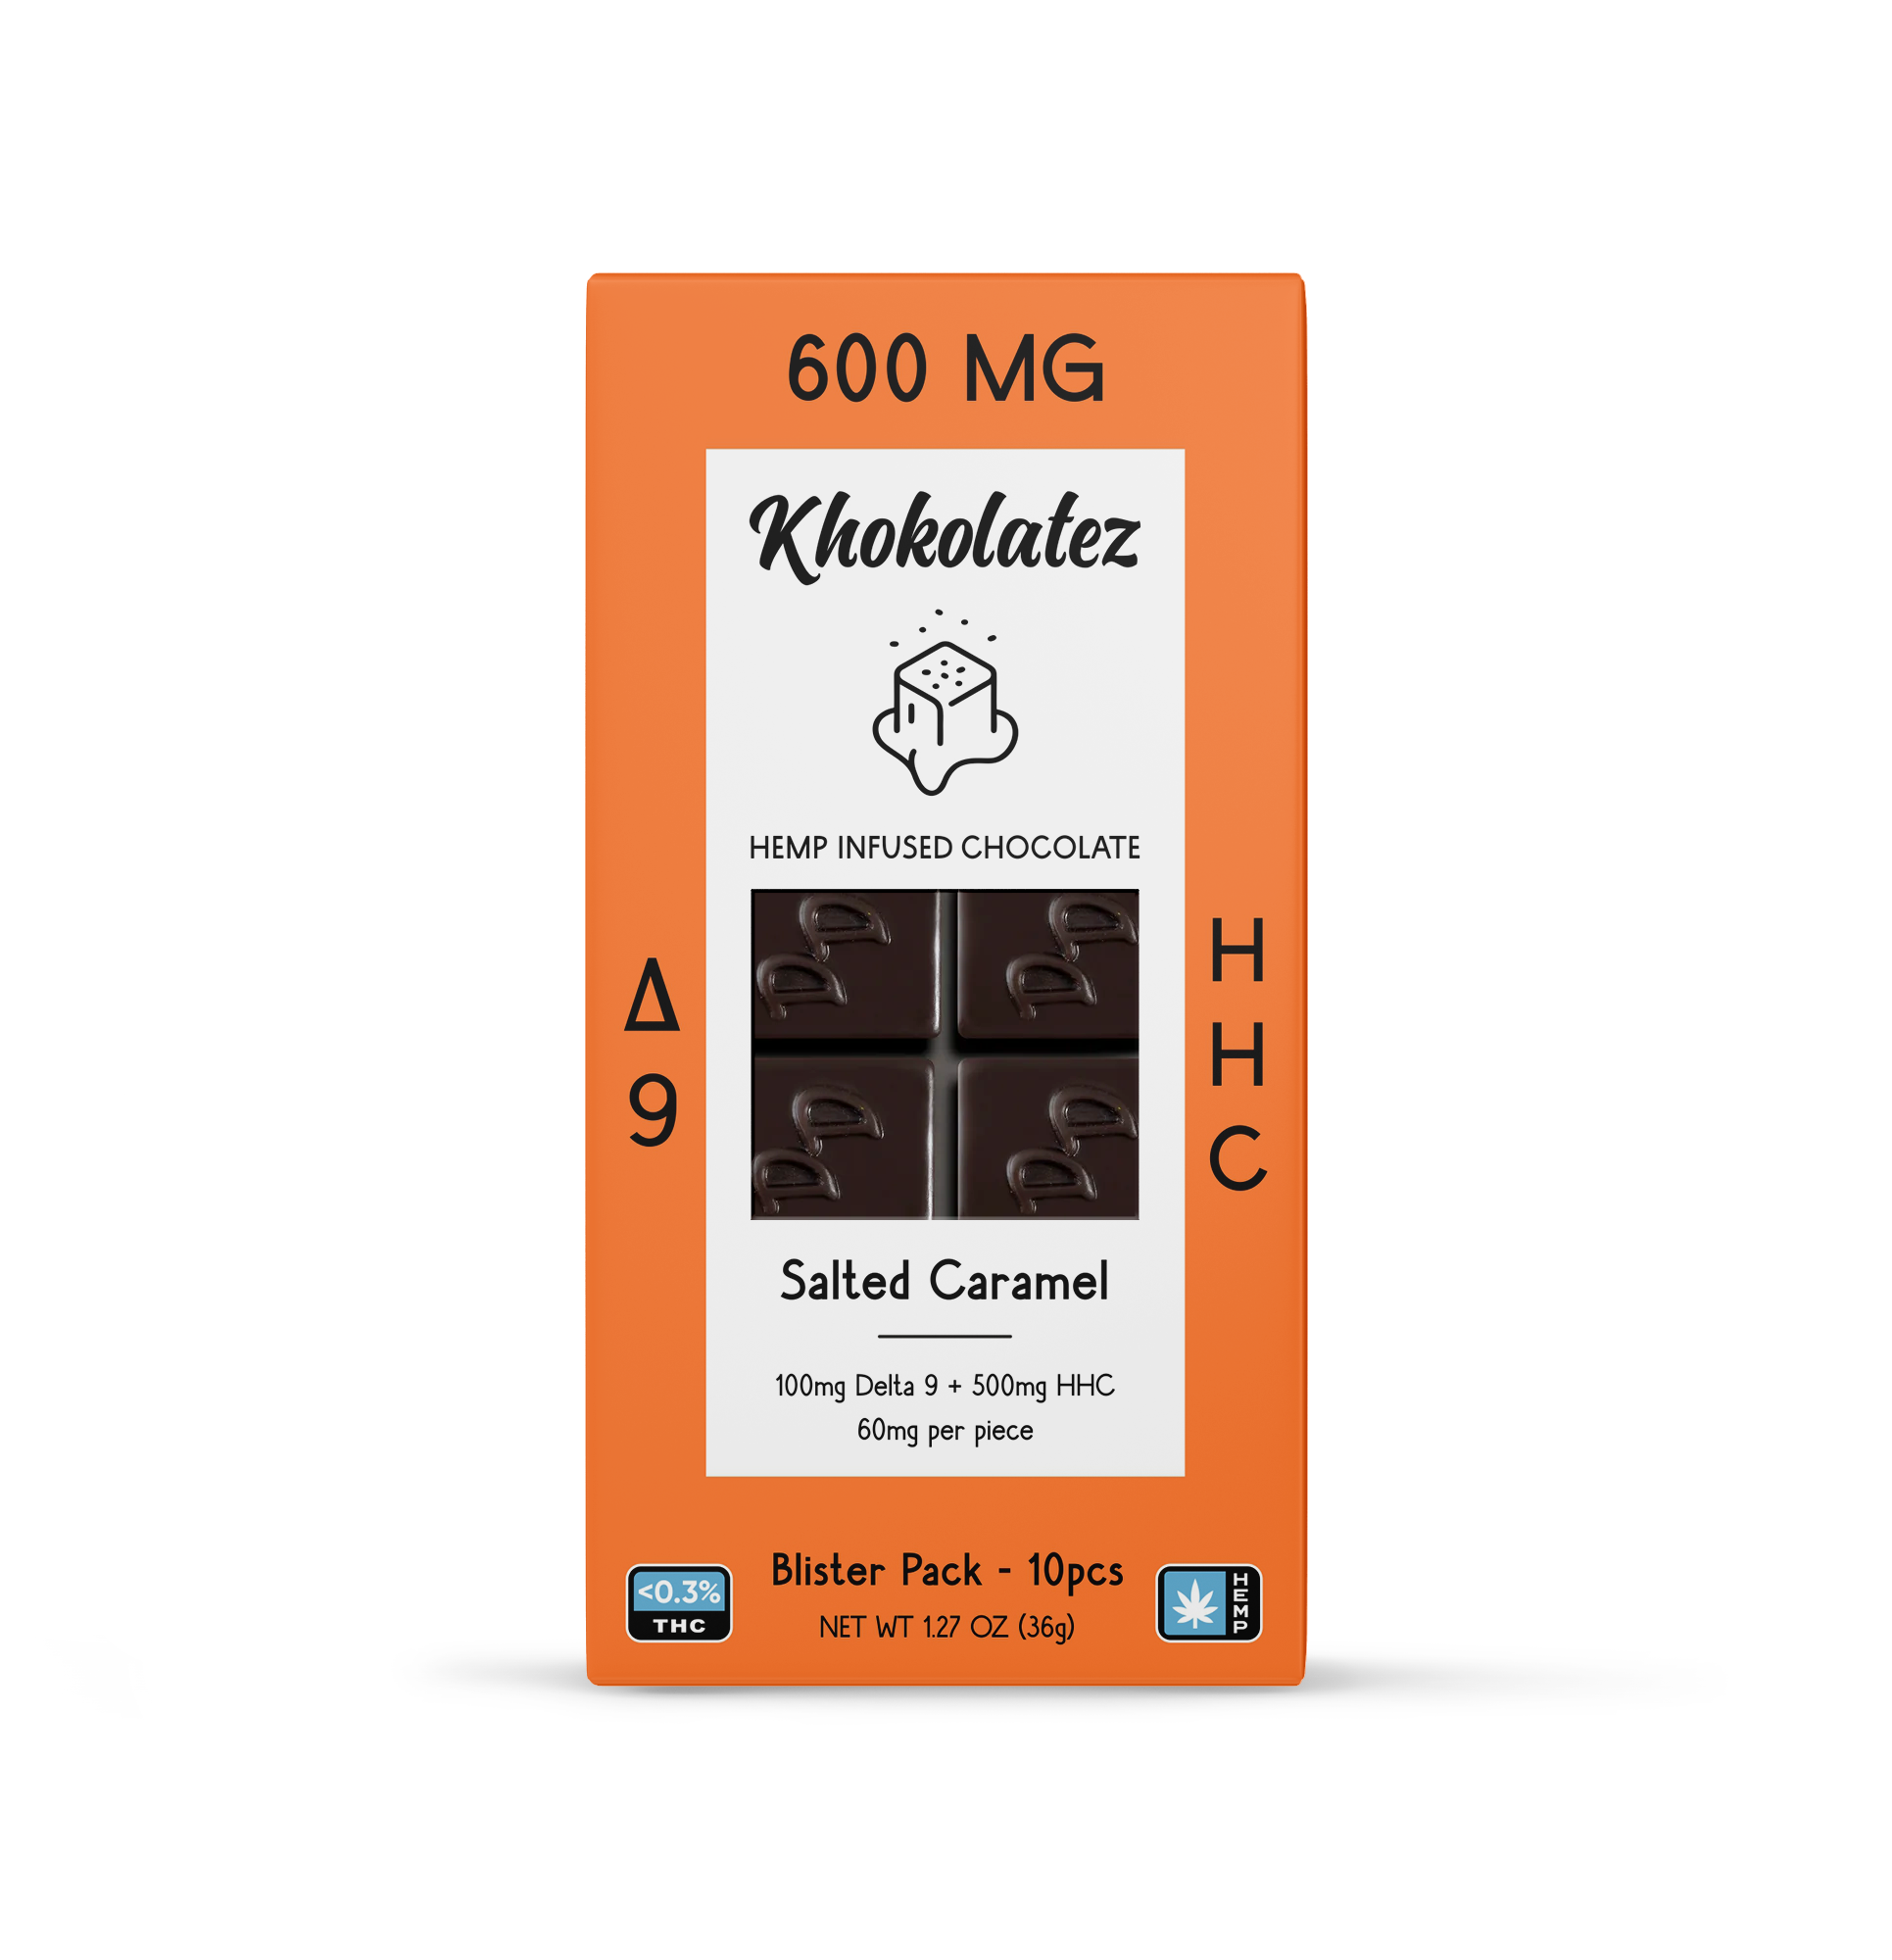 Khokolatez Delta 9 + HHC Chocolates - Box - hhemp.co Wholesale 